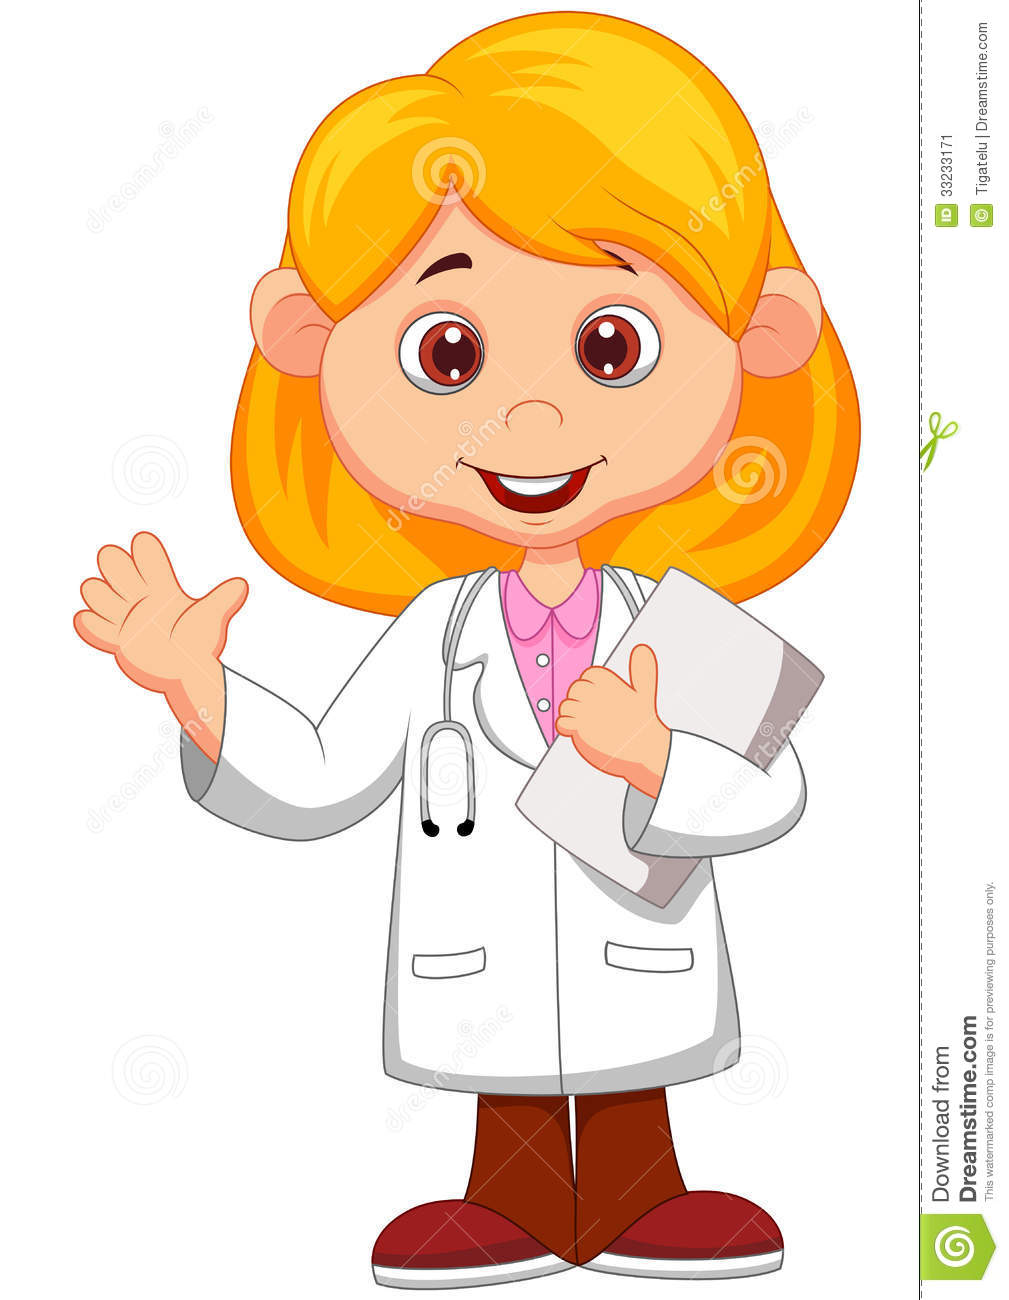 Cute Little Female Doctor Cartoon Waving Hand Stock Image   Image    